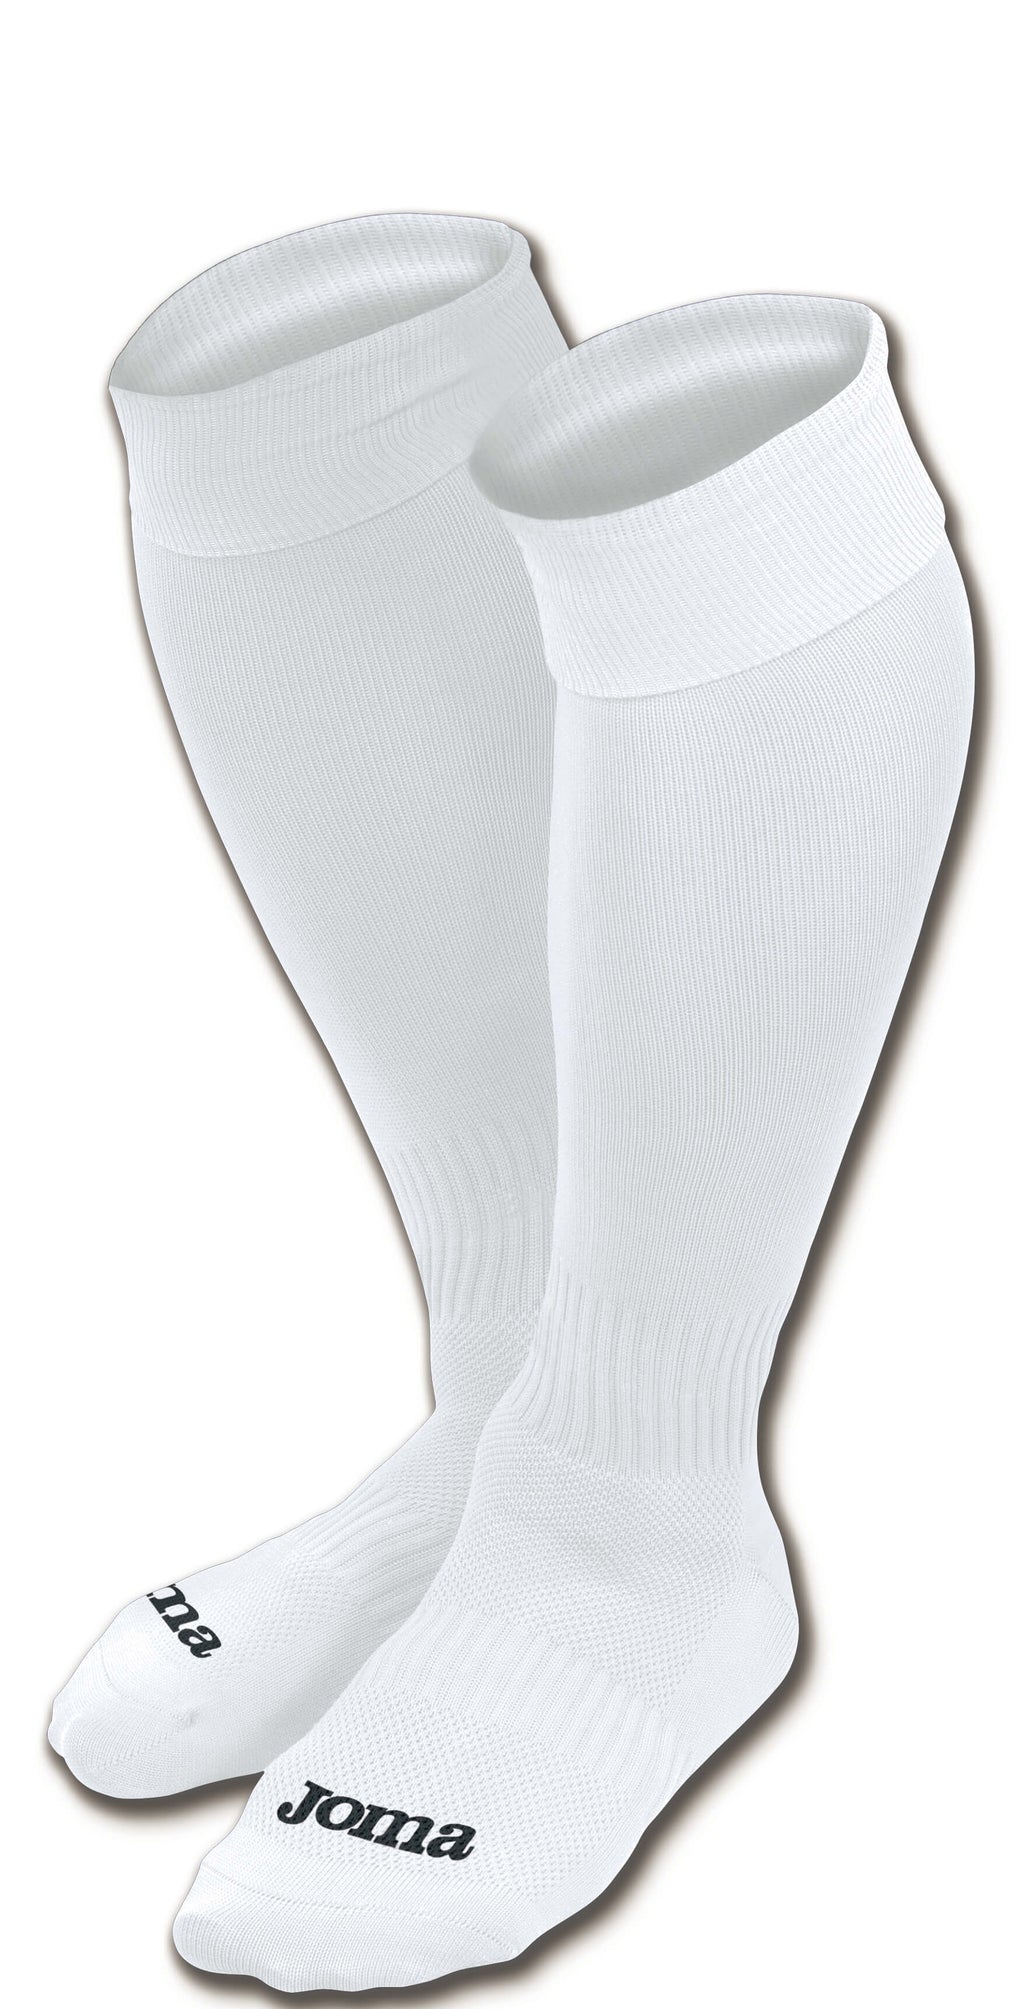 drifting Shopkeeper segment Joma Classic III Soccer Socks (20 pack) – Soccer Command